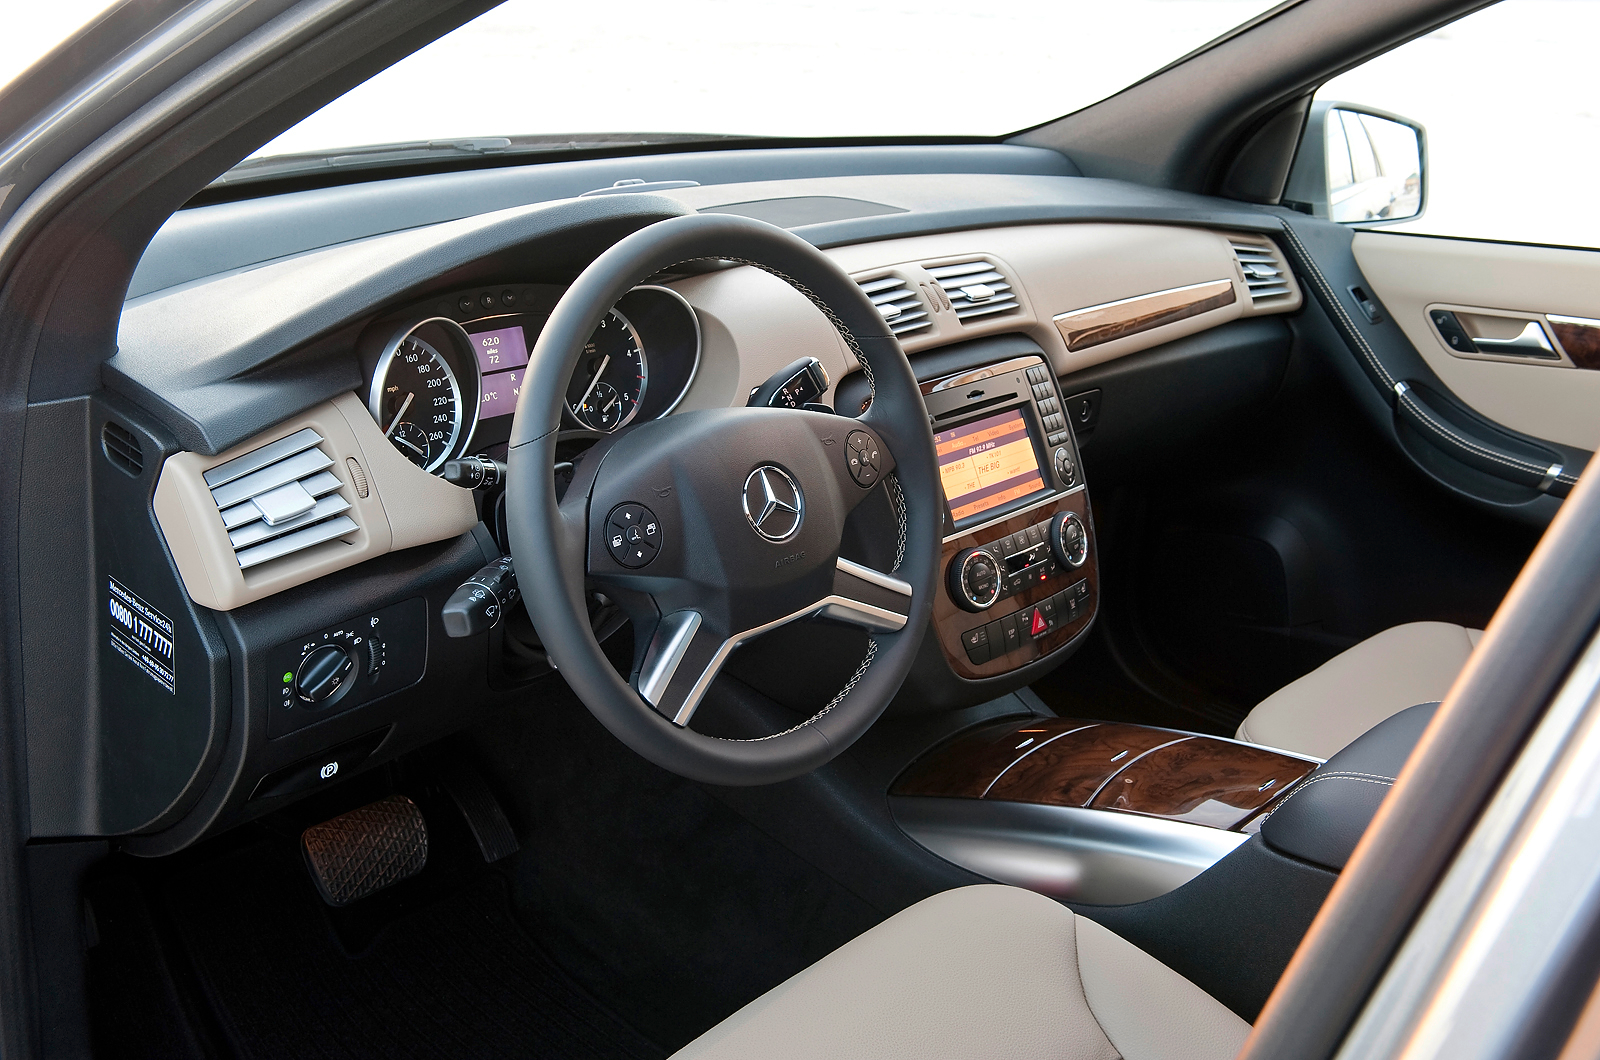 Mercedes-Benz R-Class interior